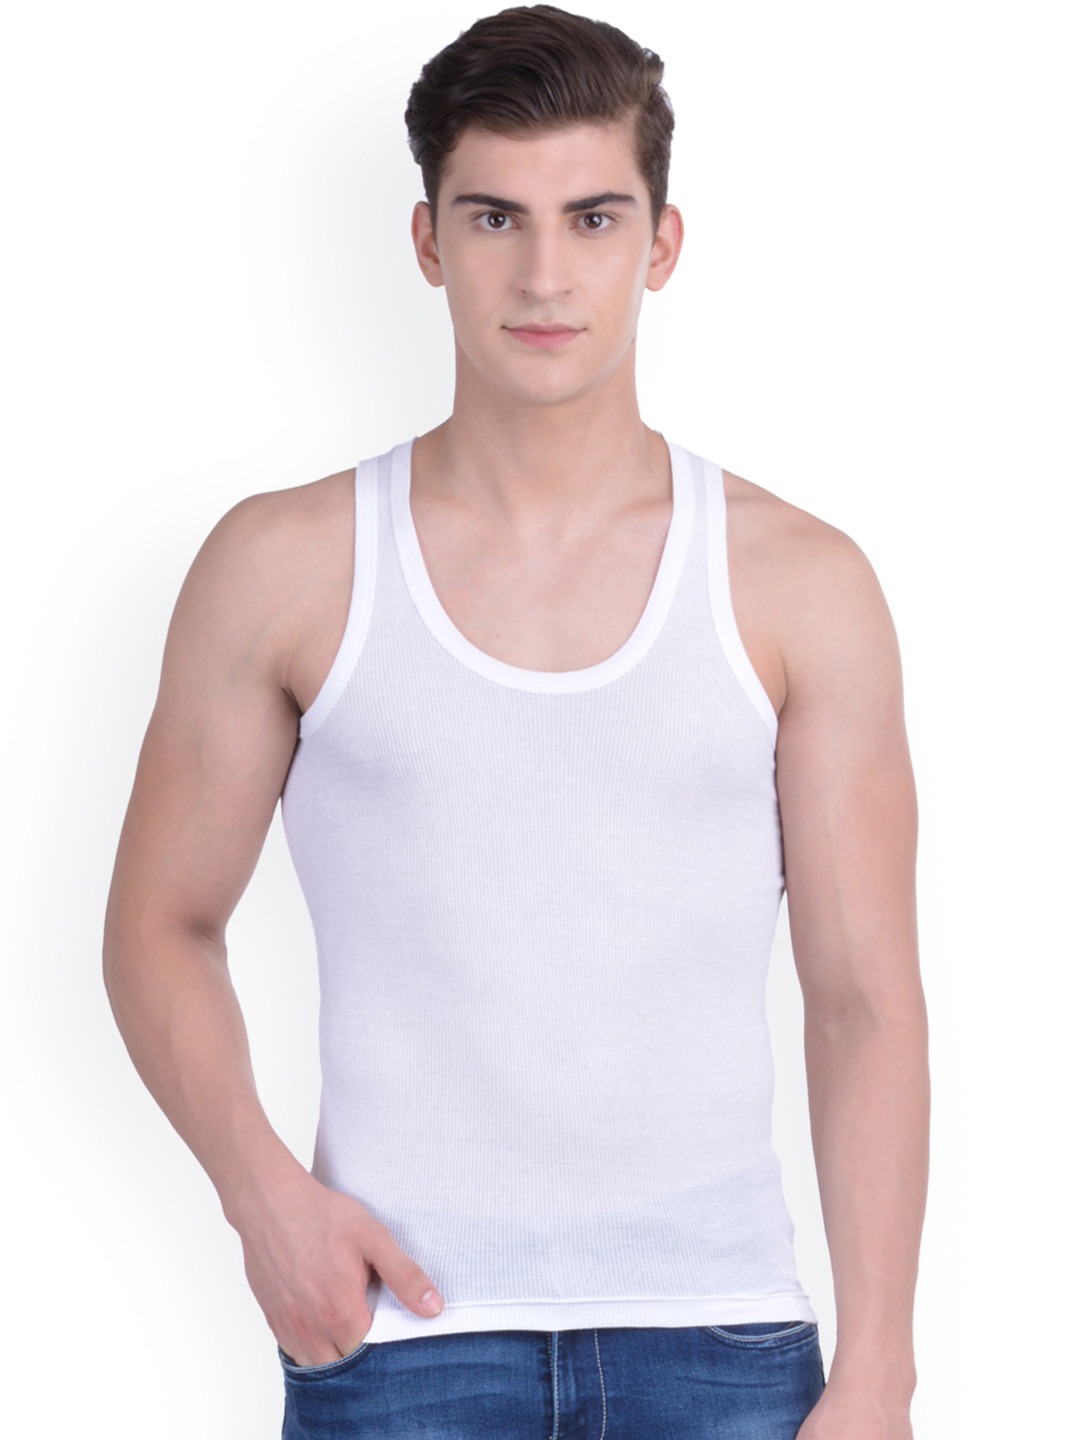 Clothing Innerwear Vests | Dollar Bigboss Pack of 2 White Innerwear Vests MDVE-04-R1-PO2 - VY69546